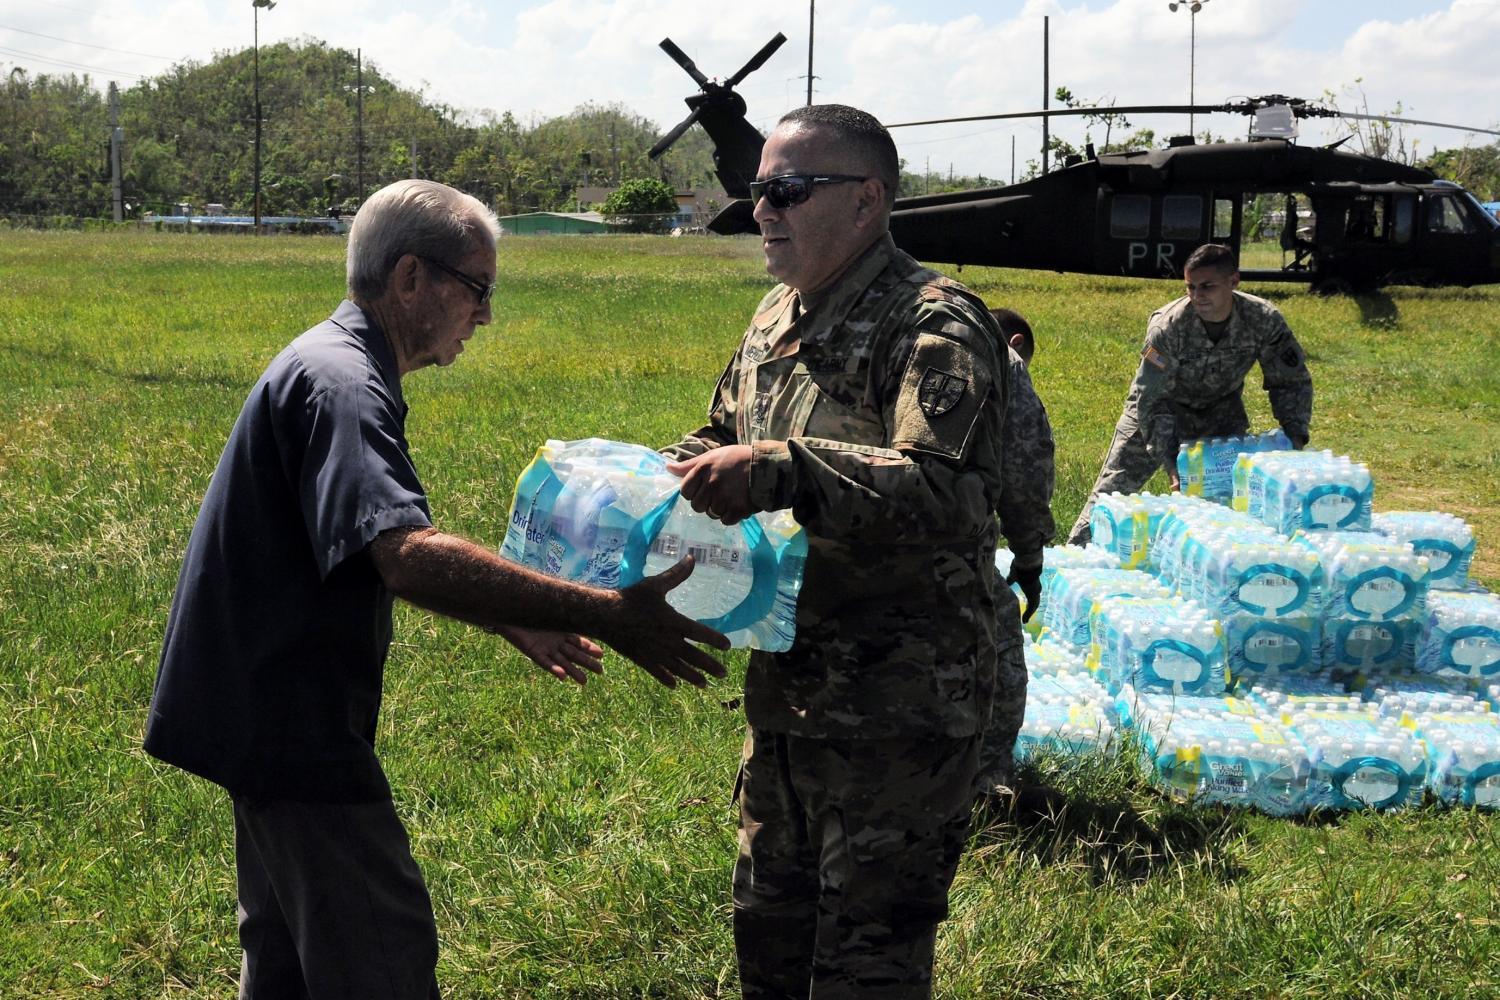 Westport community provides aid to Puerto Rico hurricane victims